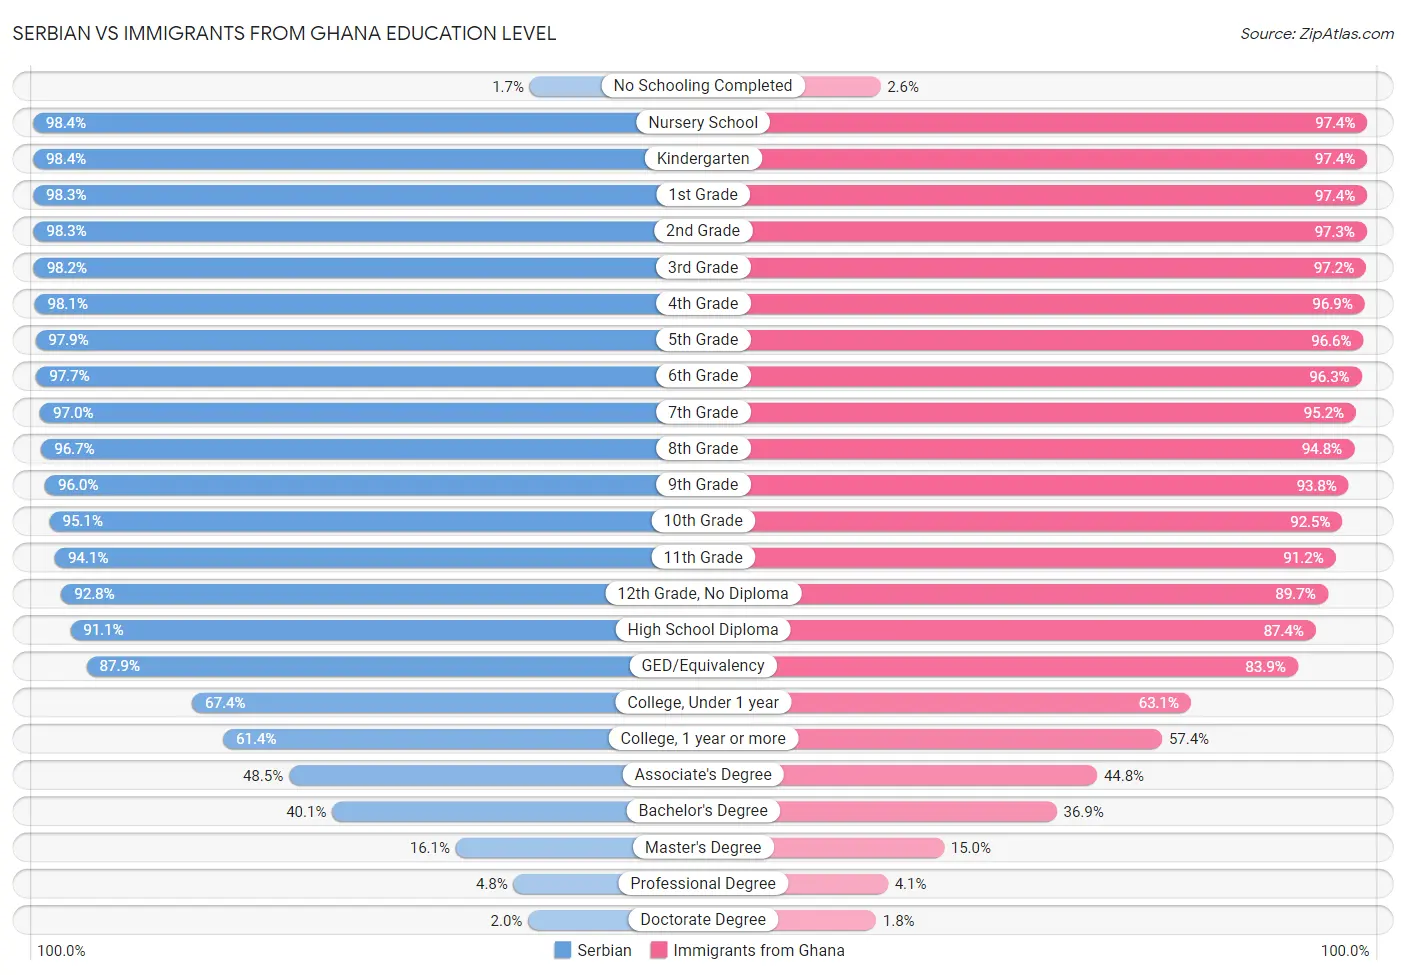 Serbian vs Immigrants from Ghana Education Level